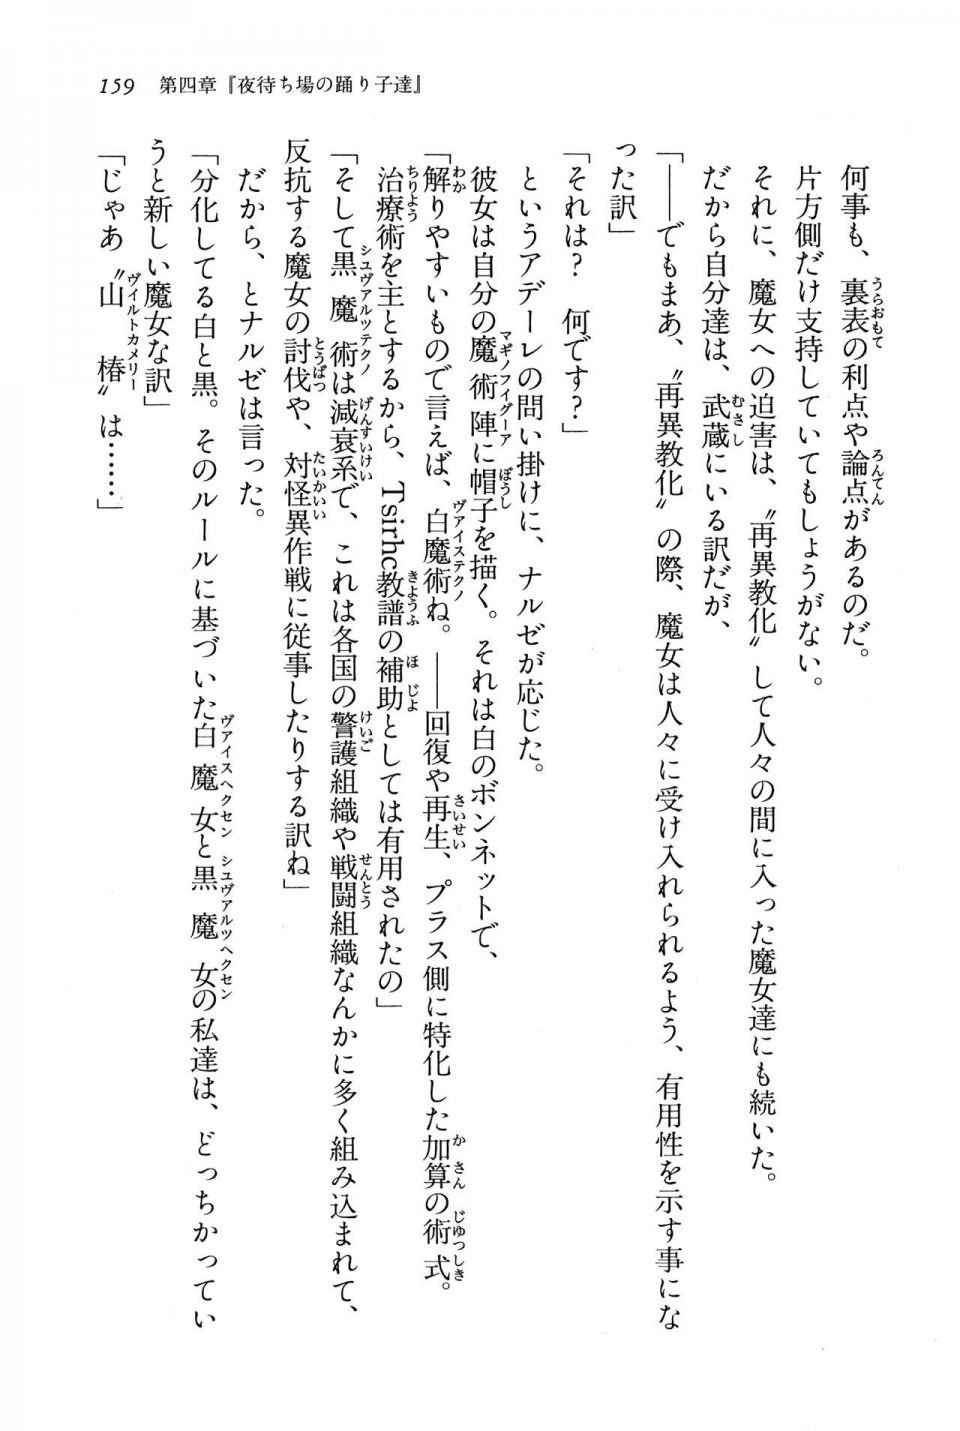 Kyoukai Senjou no Horizon BD Special Mininovel Vol 7(4A) - Photo #163